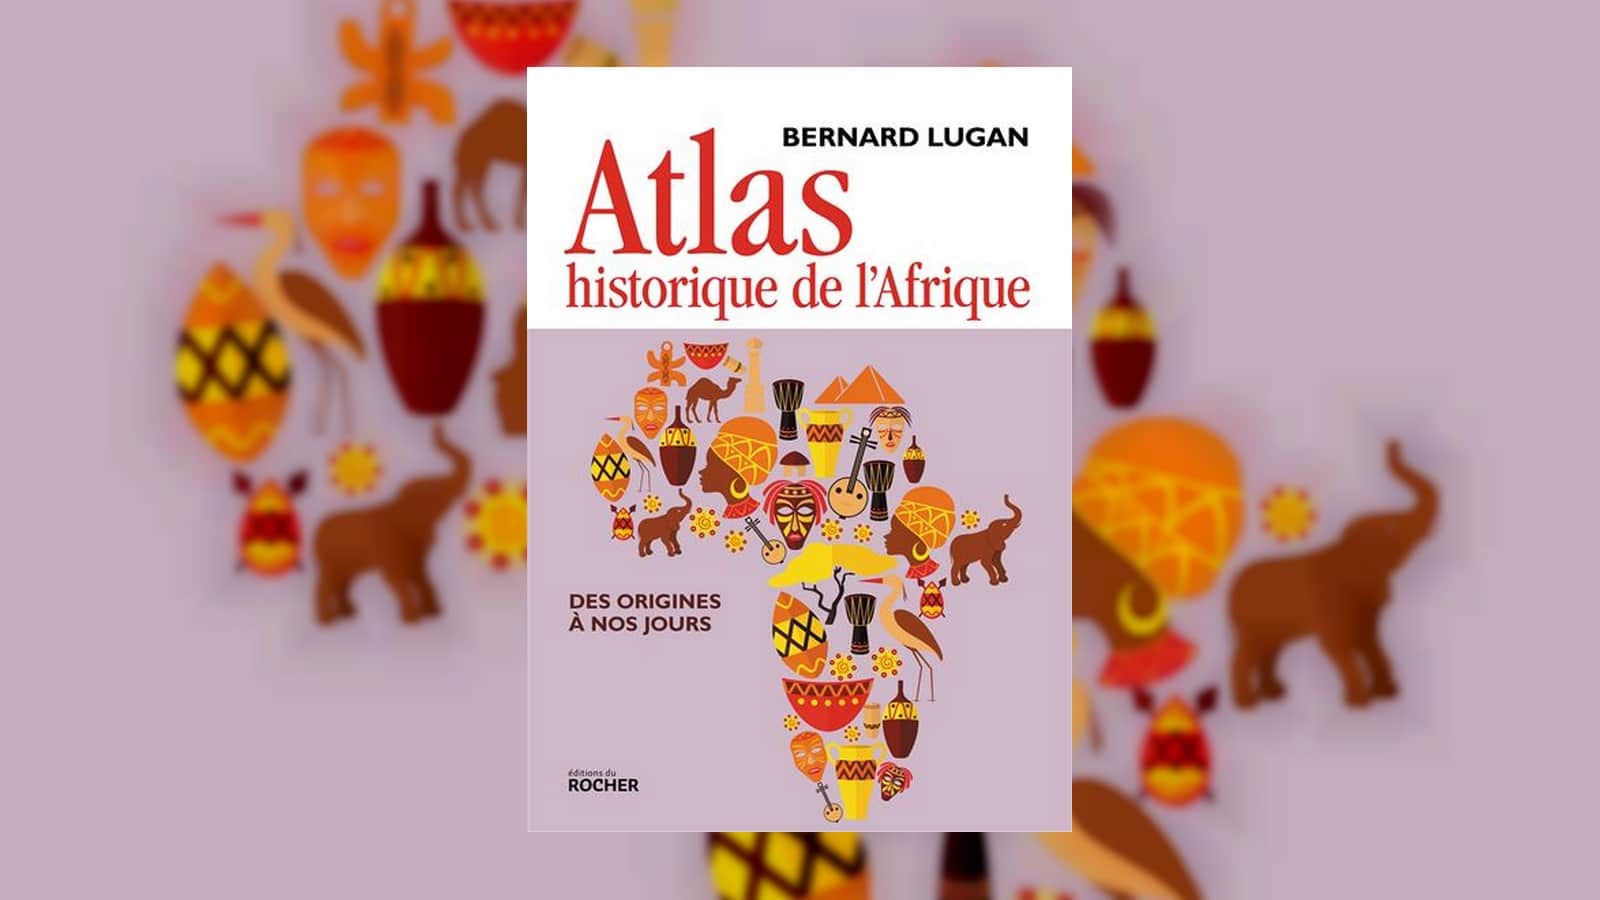 Atlas de l'Afrique historique de Bernard Lugan